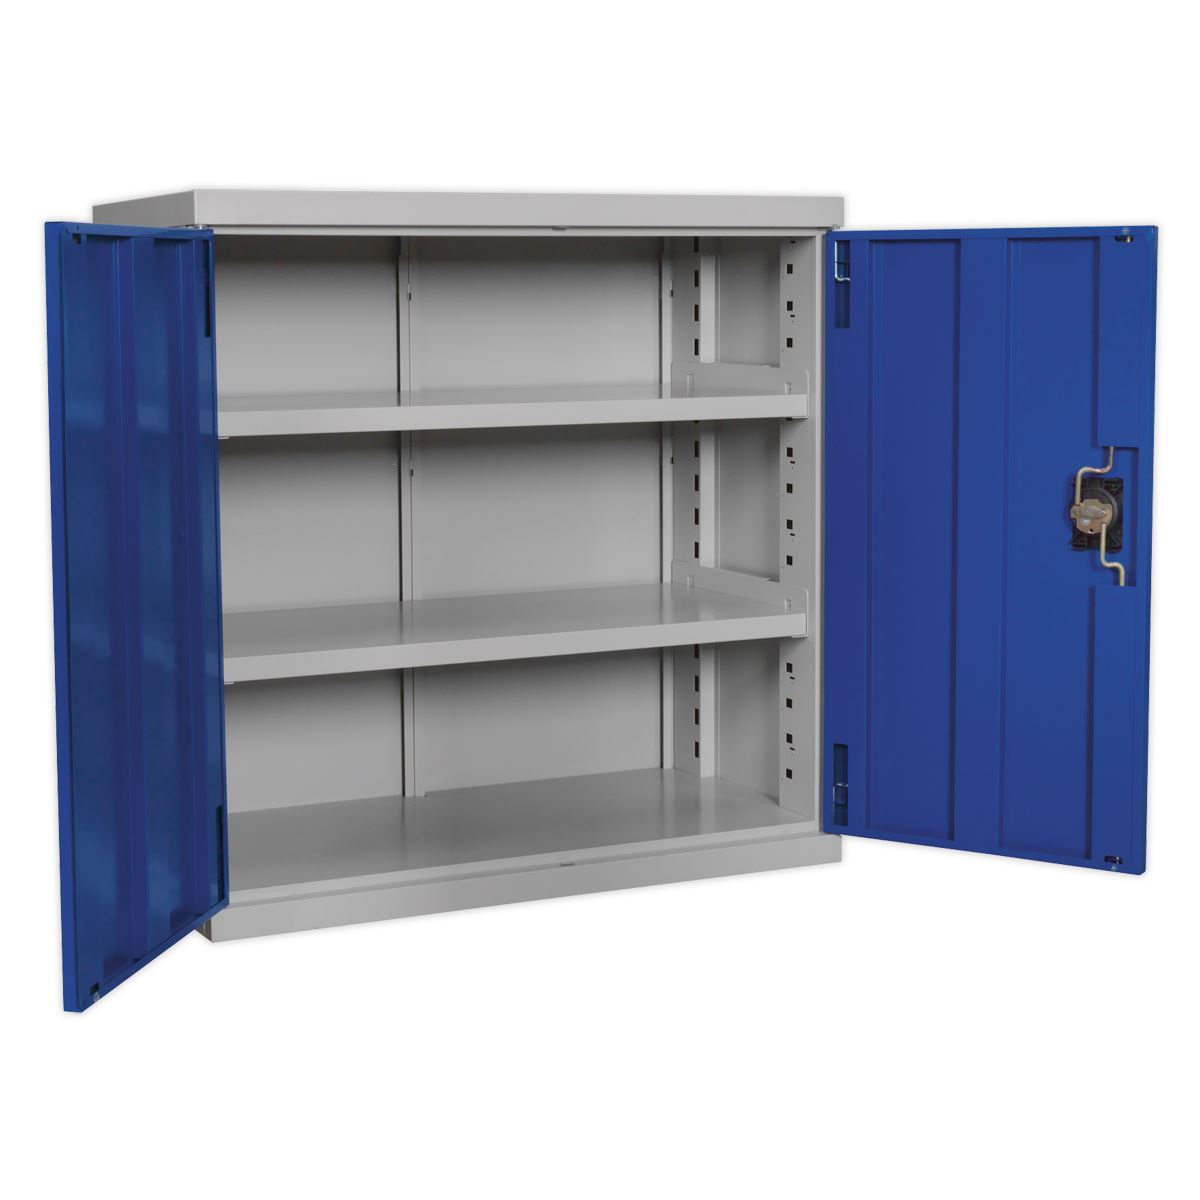 Sealey Premier Industrial Industrial Cabinet 2 Shelf 900mm